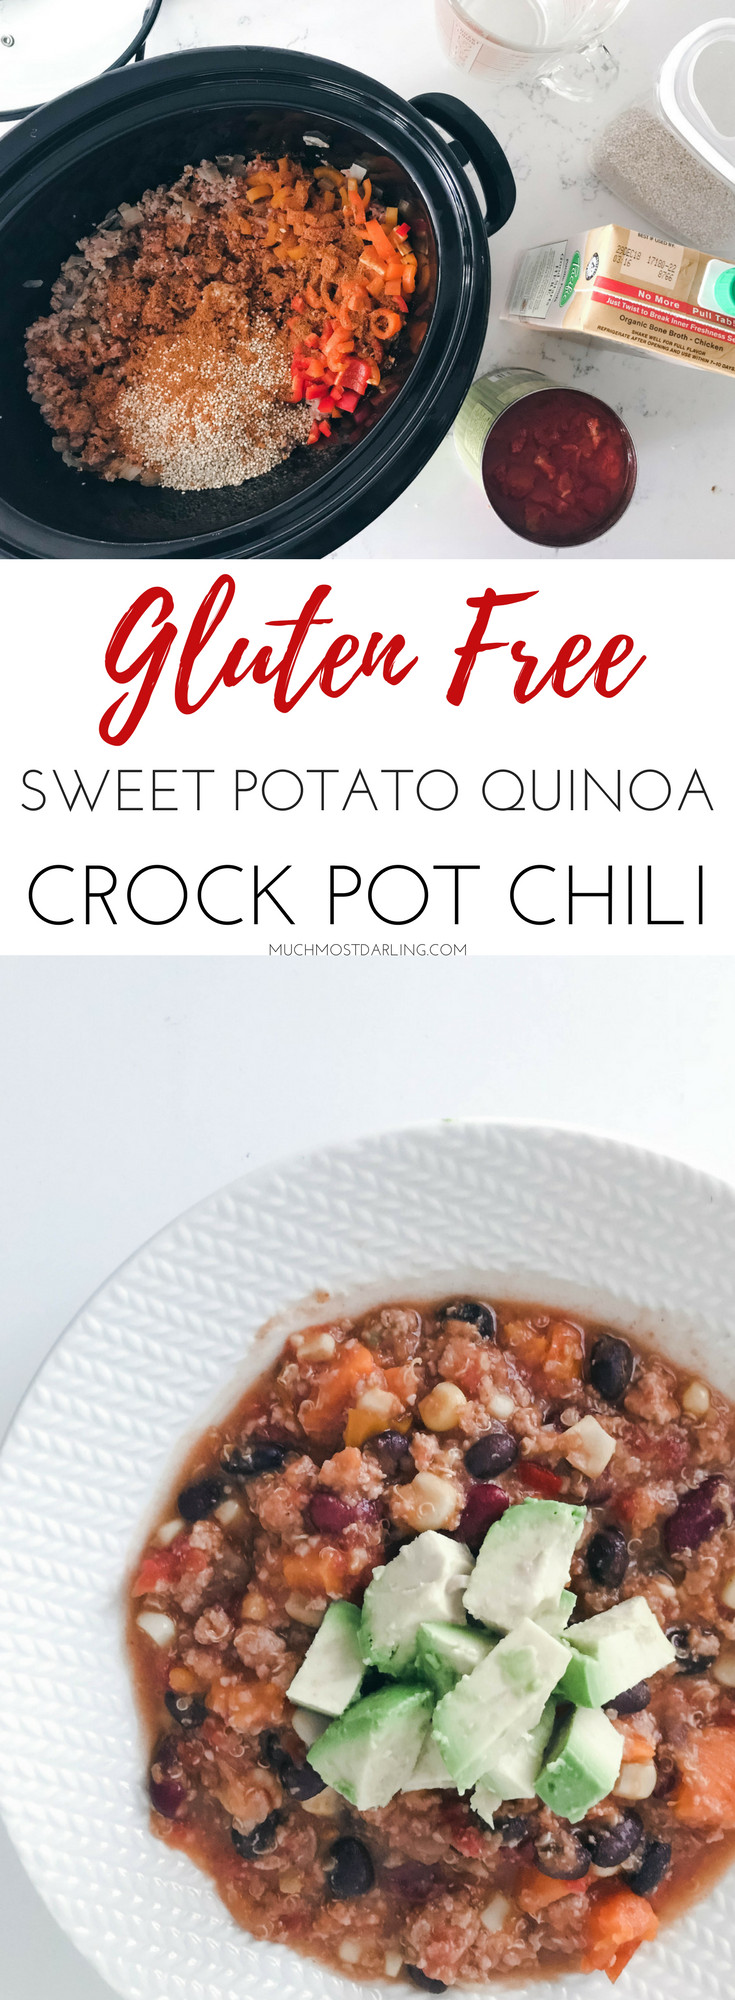 Gluten Free Dairy Free Crock Pot Recipes Gluten Free Crockpot Recipe Sweet Potato & Ground Turkey